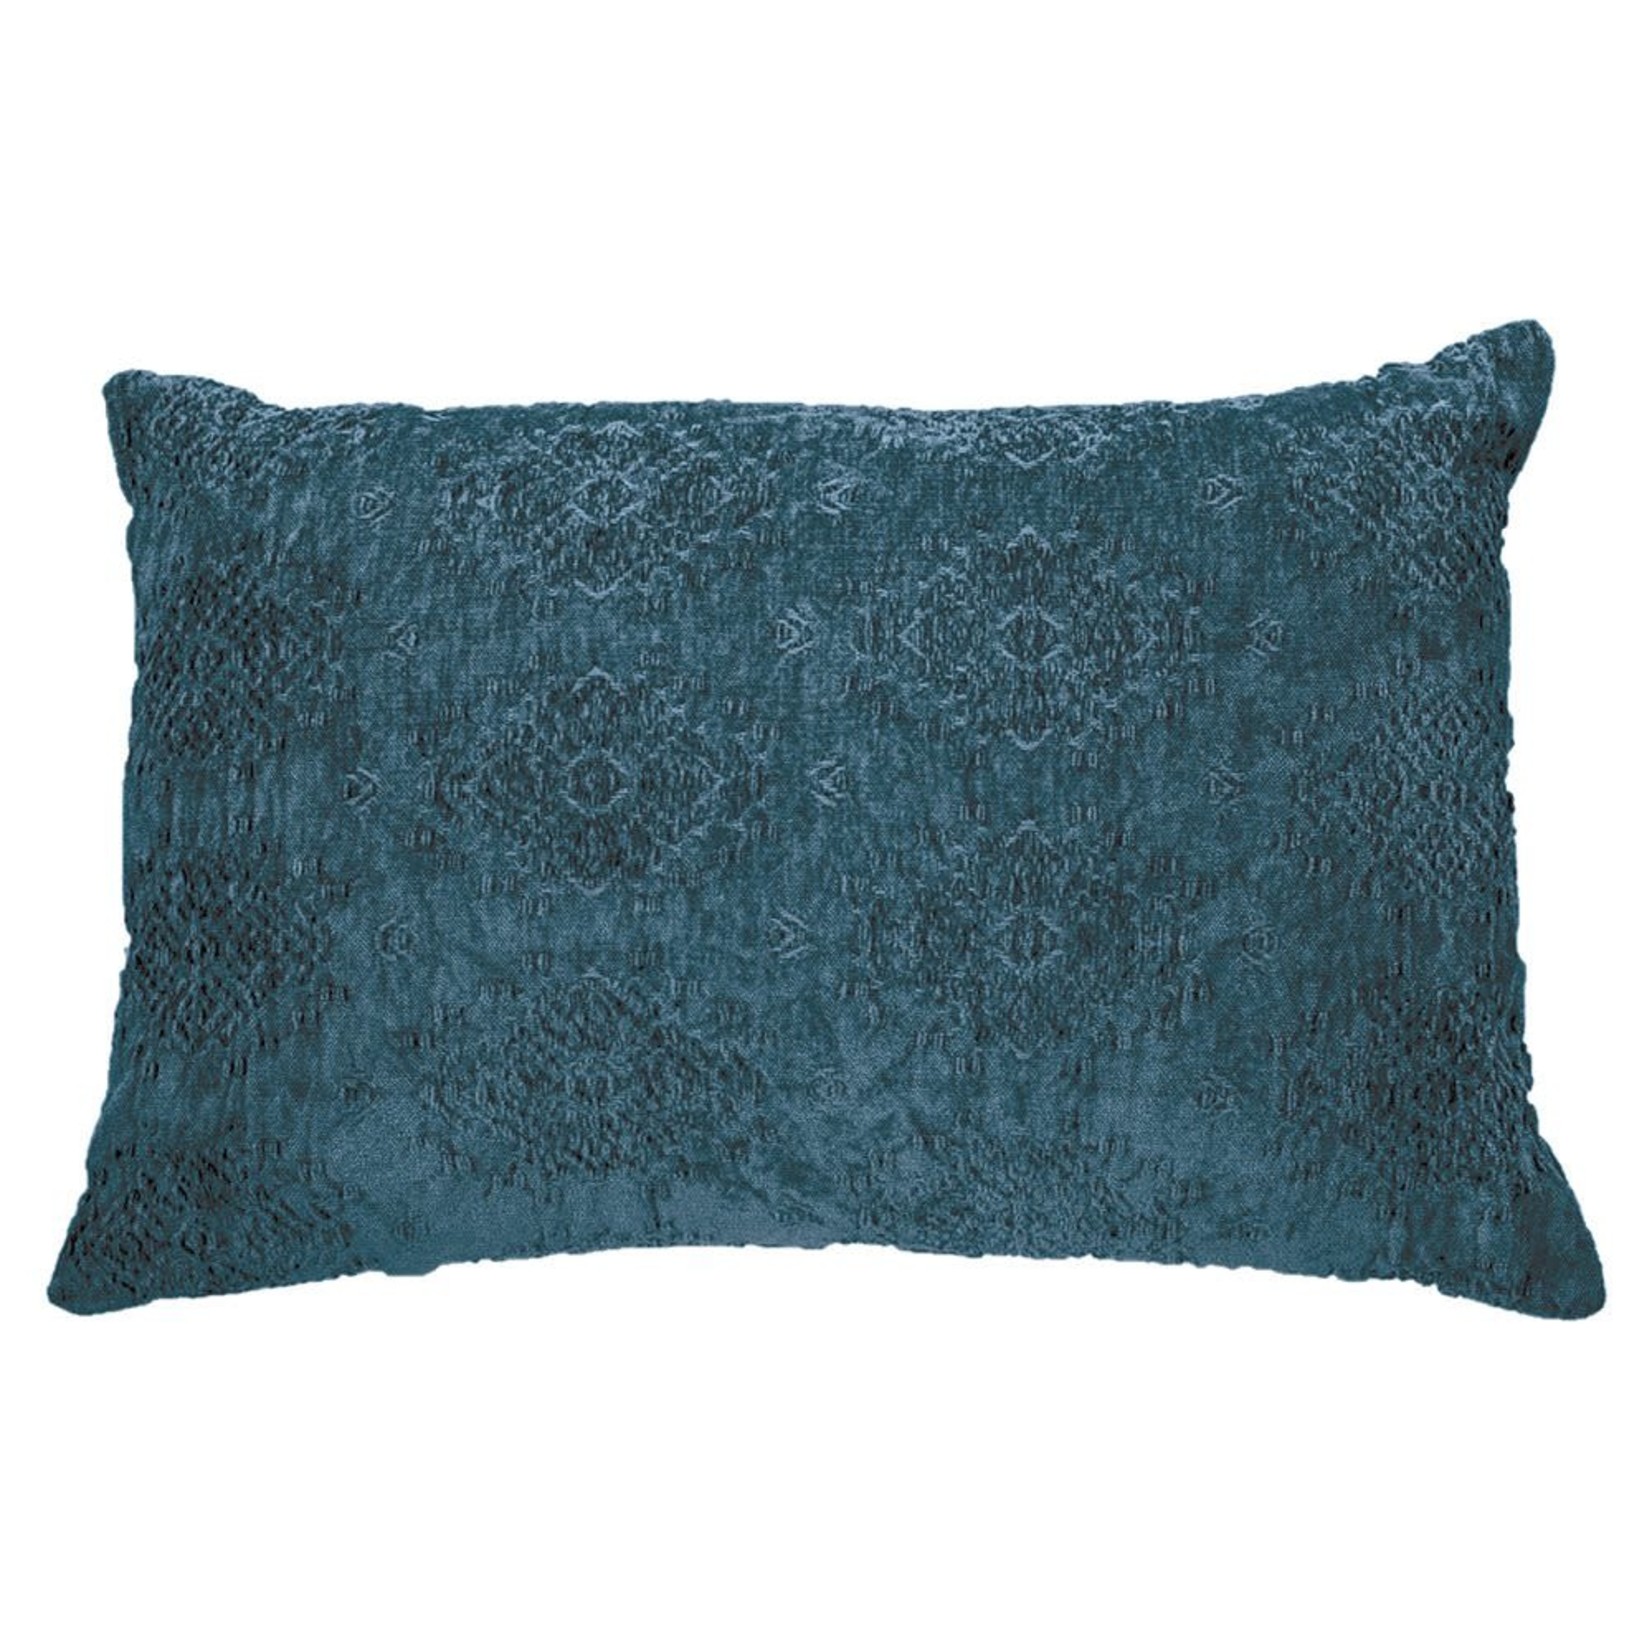 Brunelli Toro Navy Blue Cushion